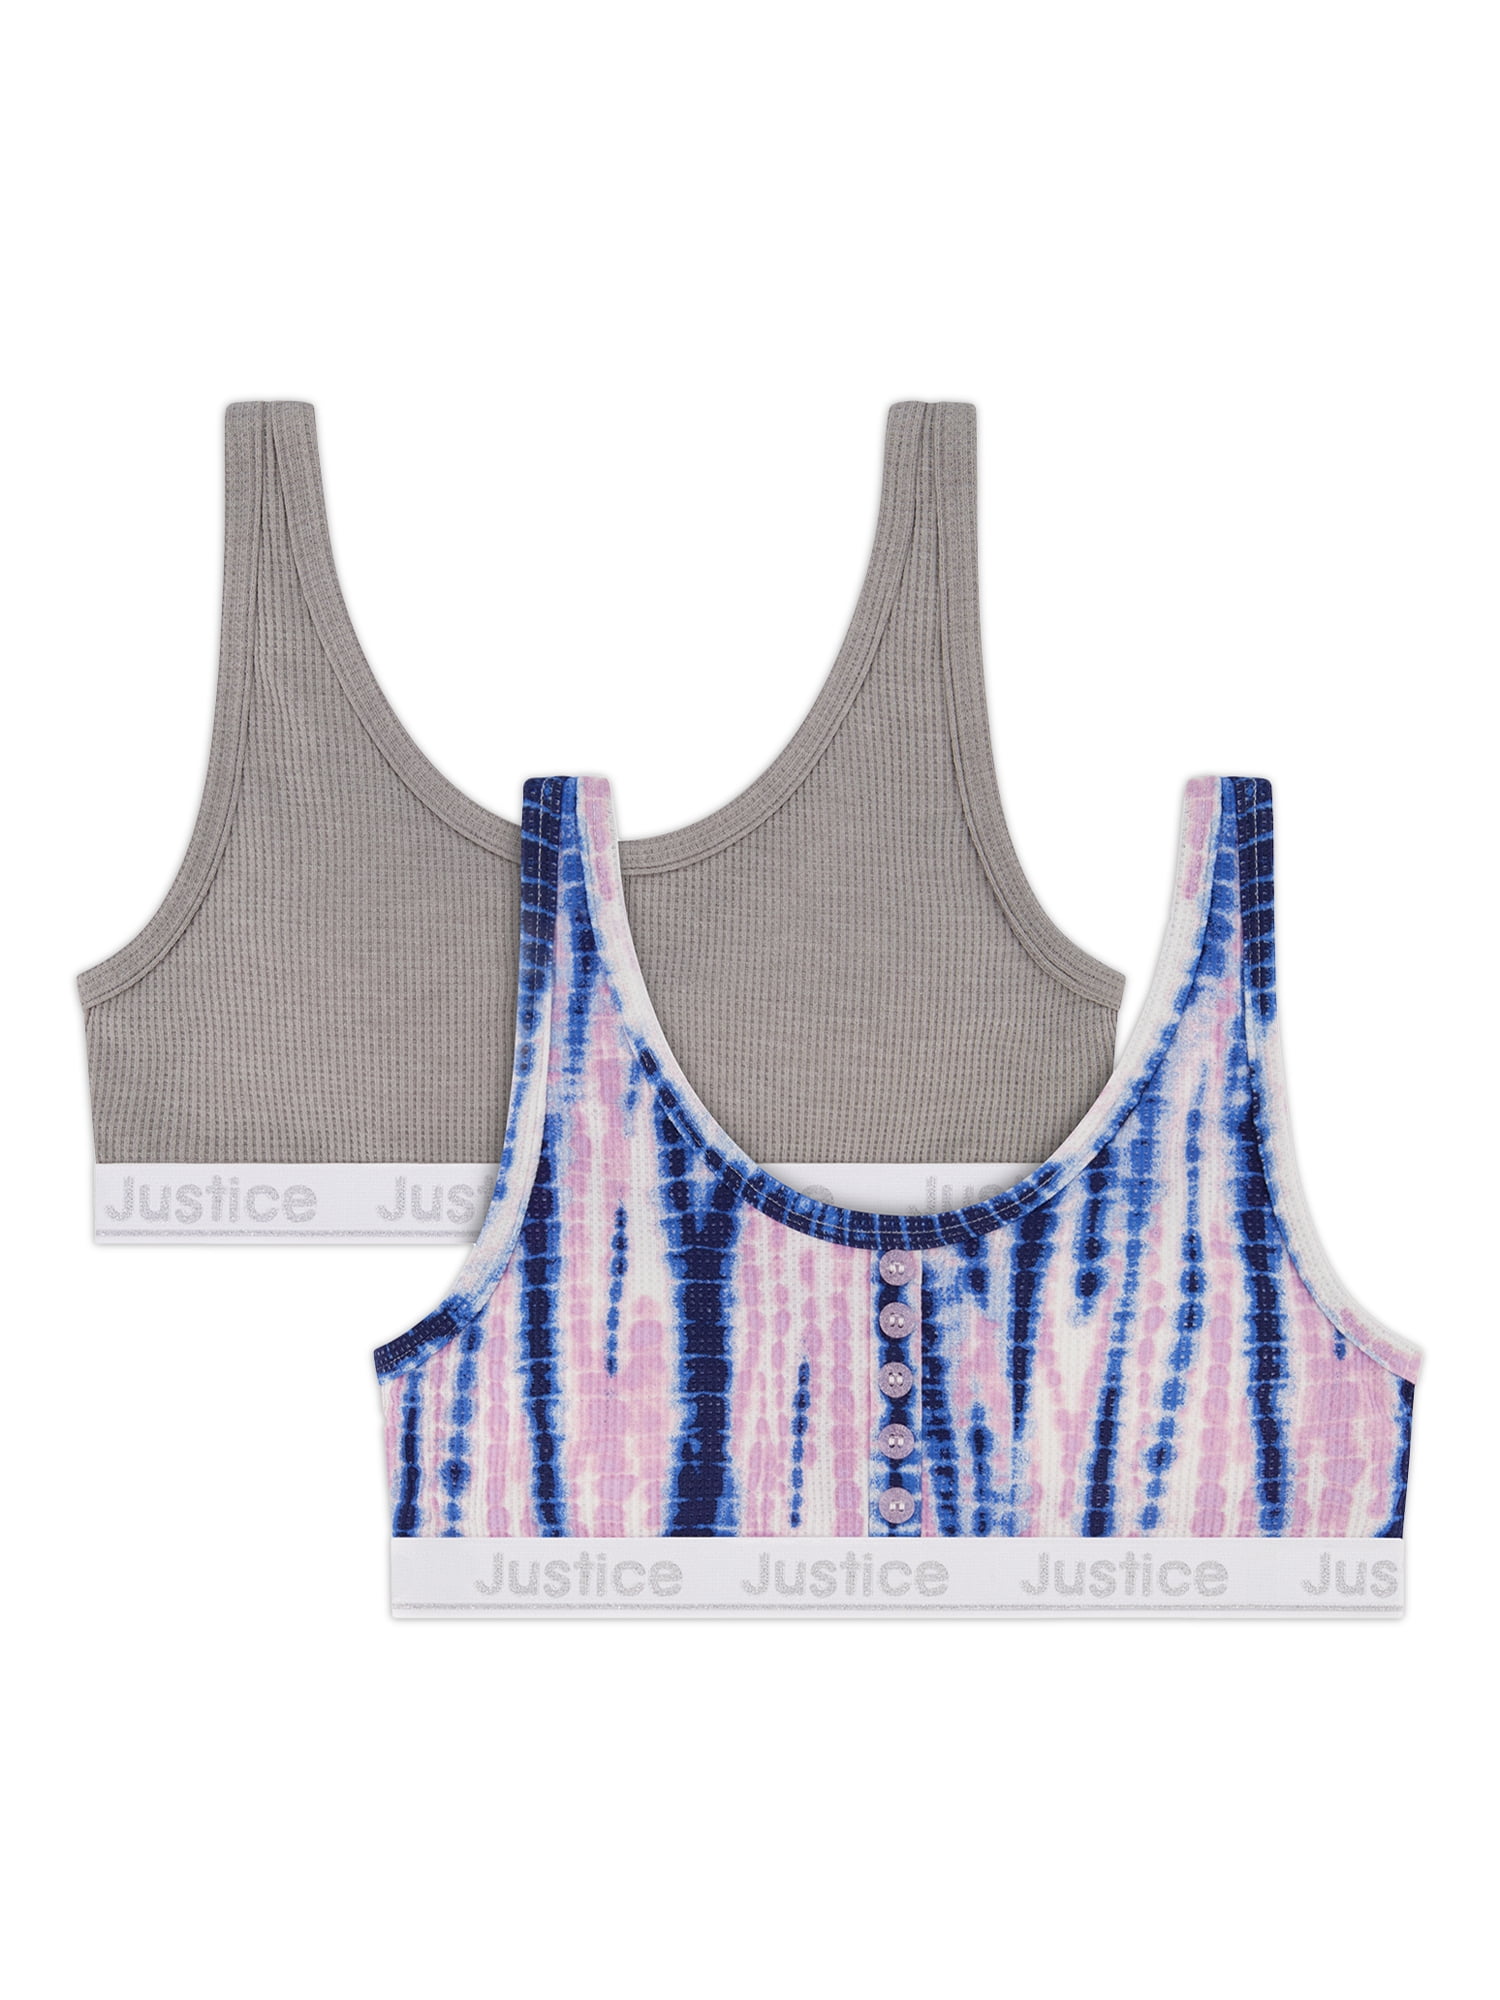 justice sports bra  Bralet tops, Justice bras, Blue crop tops